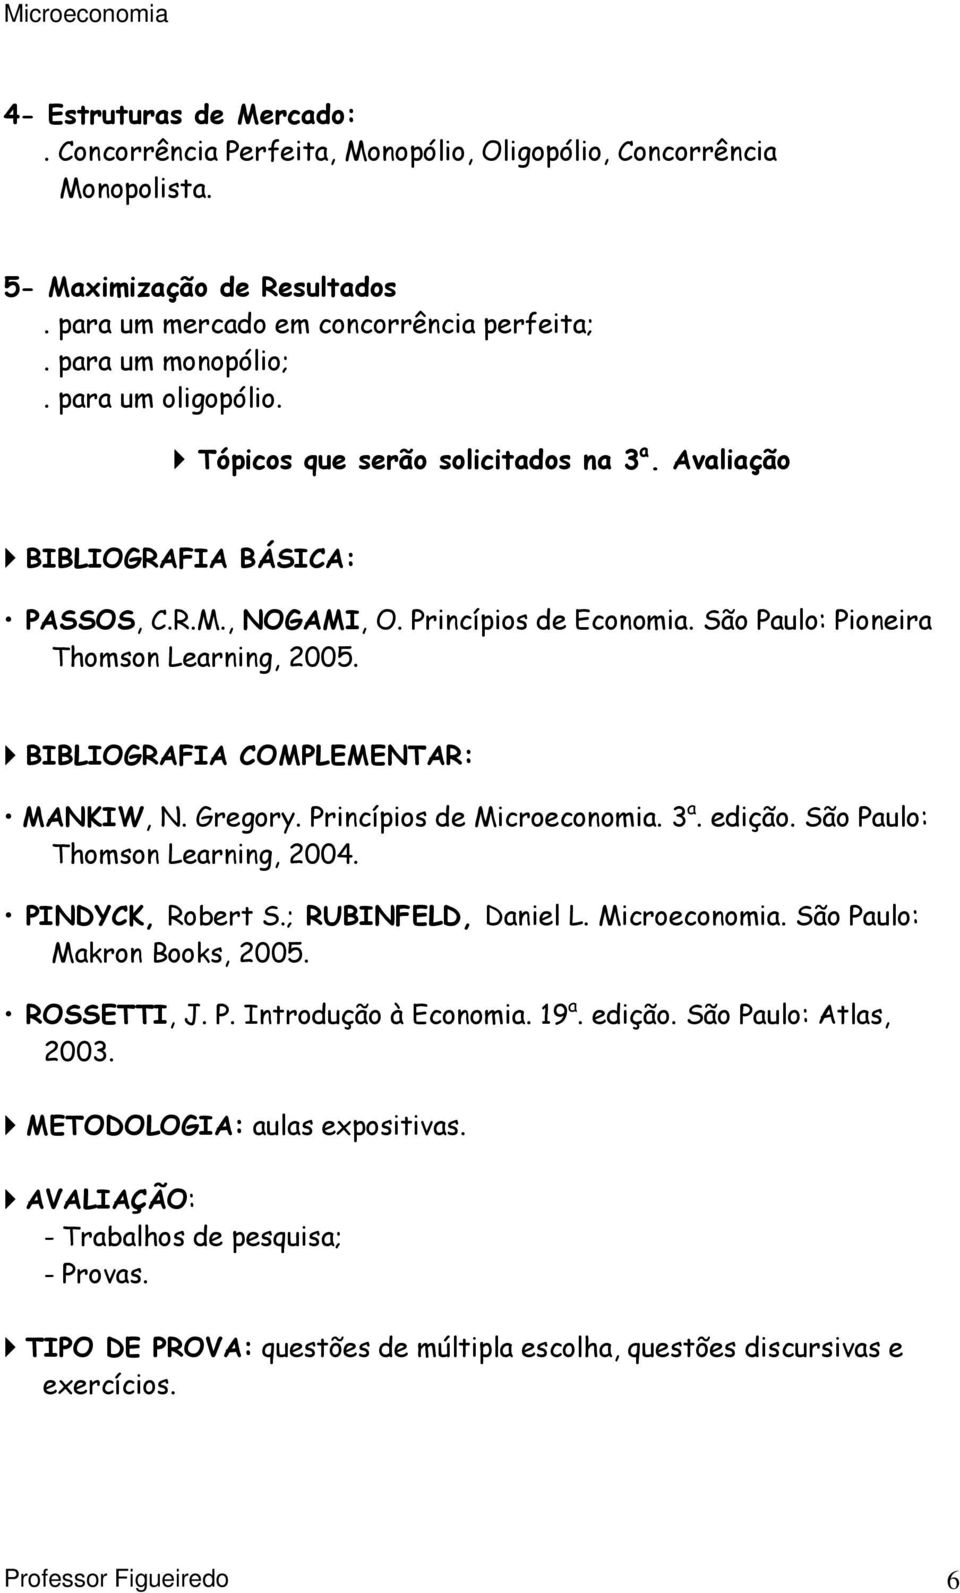 BIBLIOGRAFIA COMPLEMENTAR: MANKIW, N. Gregory. Princípios de Microeconomia. 3 a. edição. São Paulo: Thomson Learning, 2004. PINDYCK, Robert S.; RUBINFELD, Daniel L. Microeconomia. São Paulo: Makron Books, 2005.